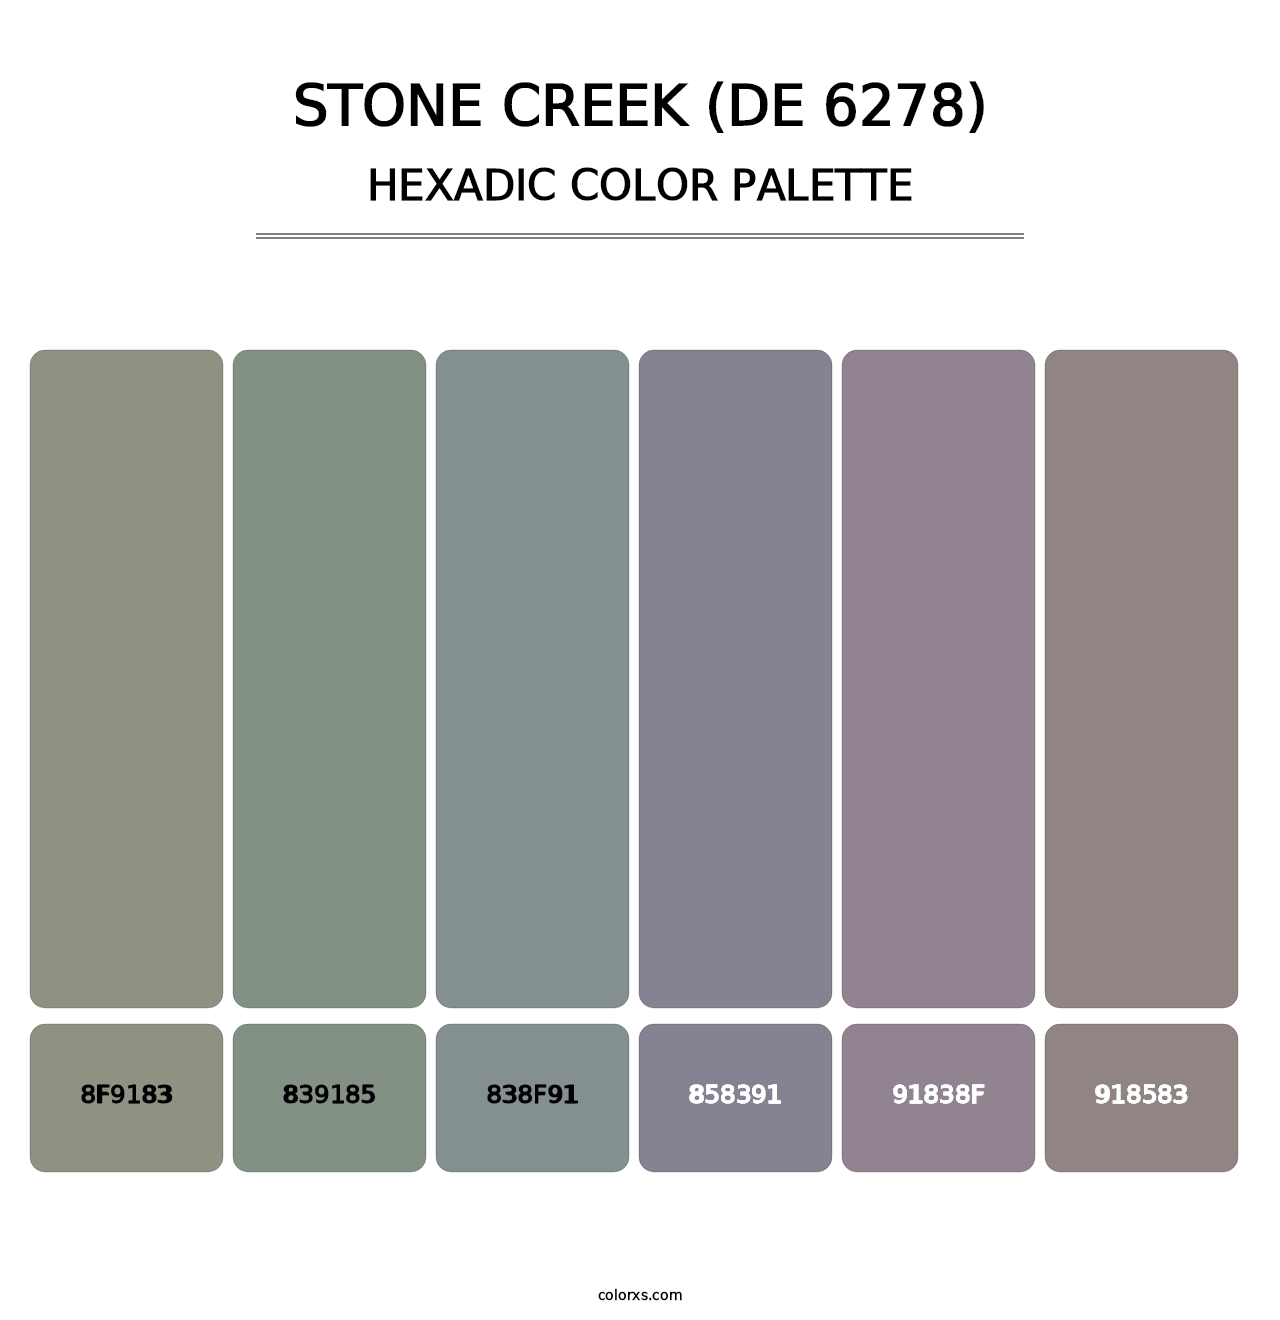 Stone Creek (DE 6278) - Hexadic Color Palette